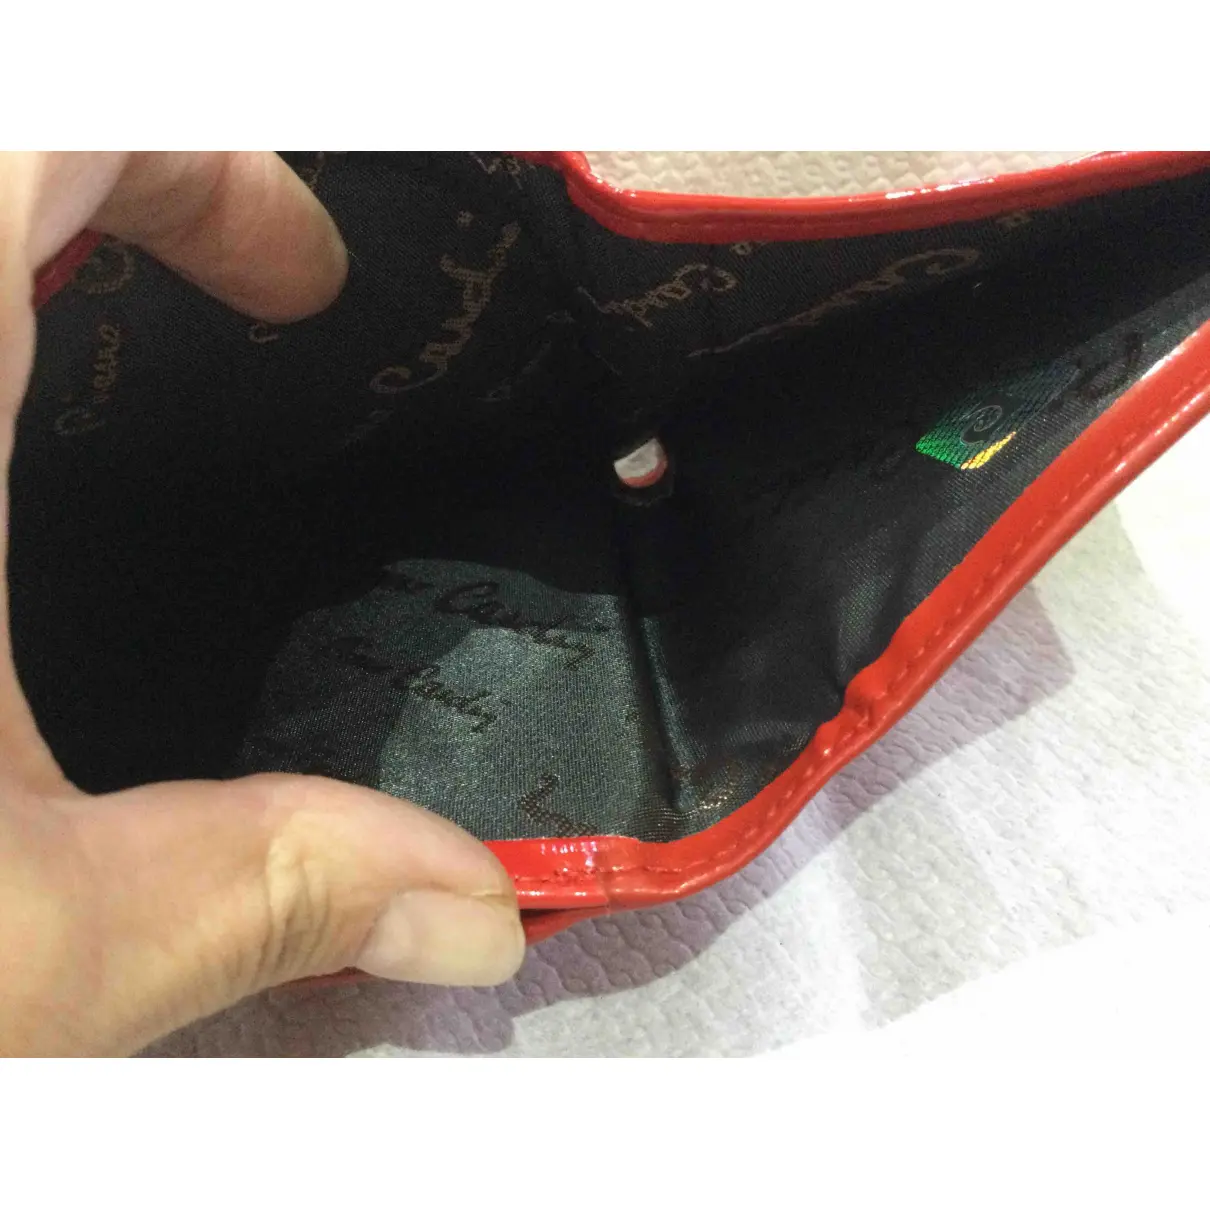 Patent leather wallet Pierre Cardin